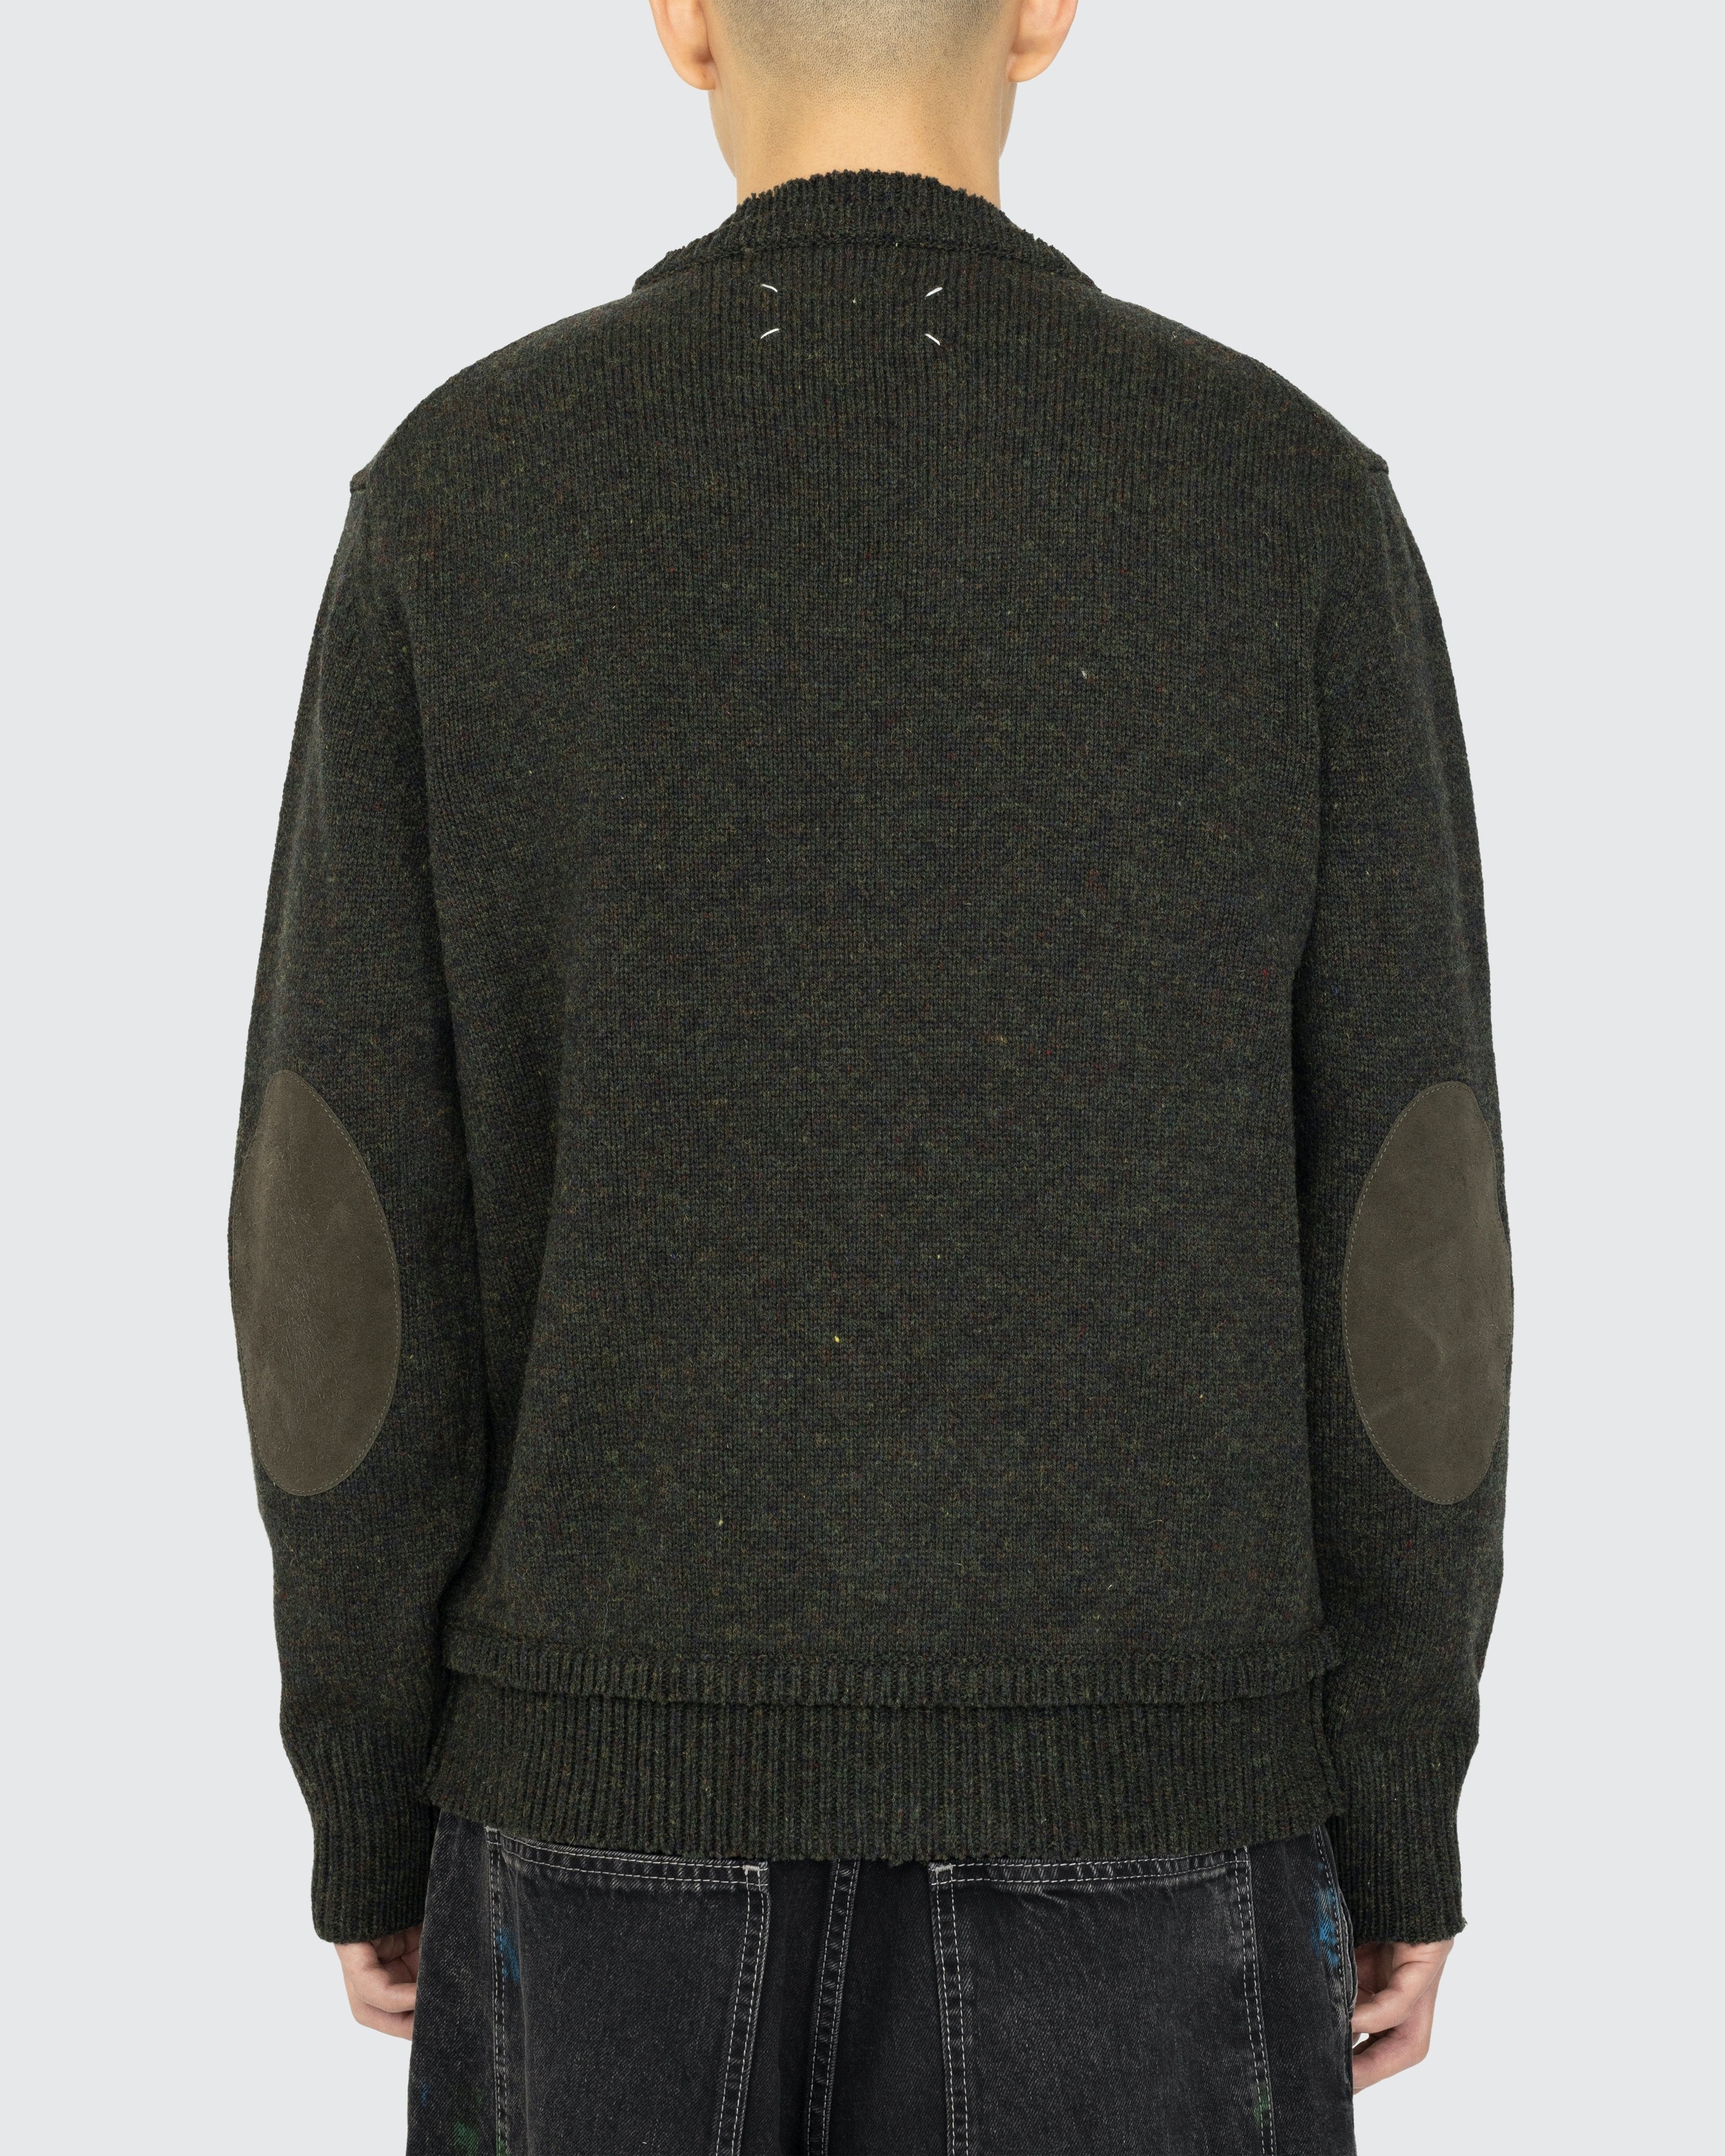 Maison Margiela – Elbow Patch Sweater Dark Green - Crewnecks - Green - Image 4